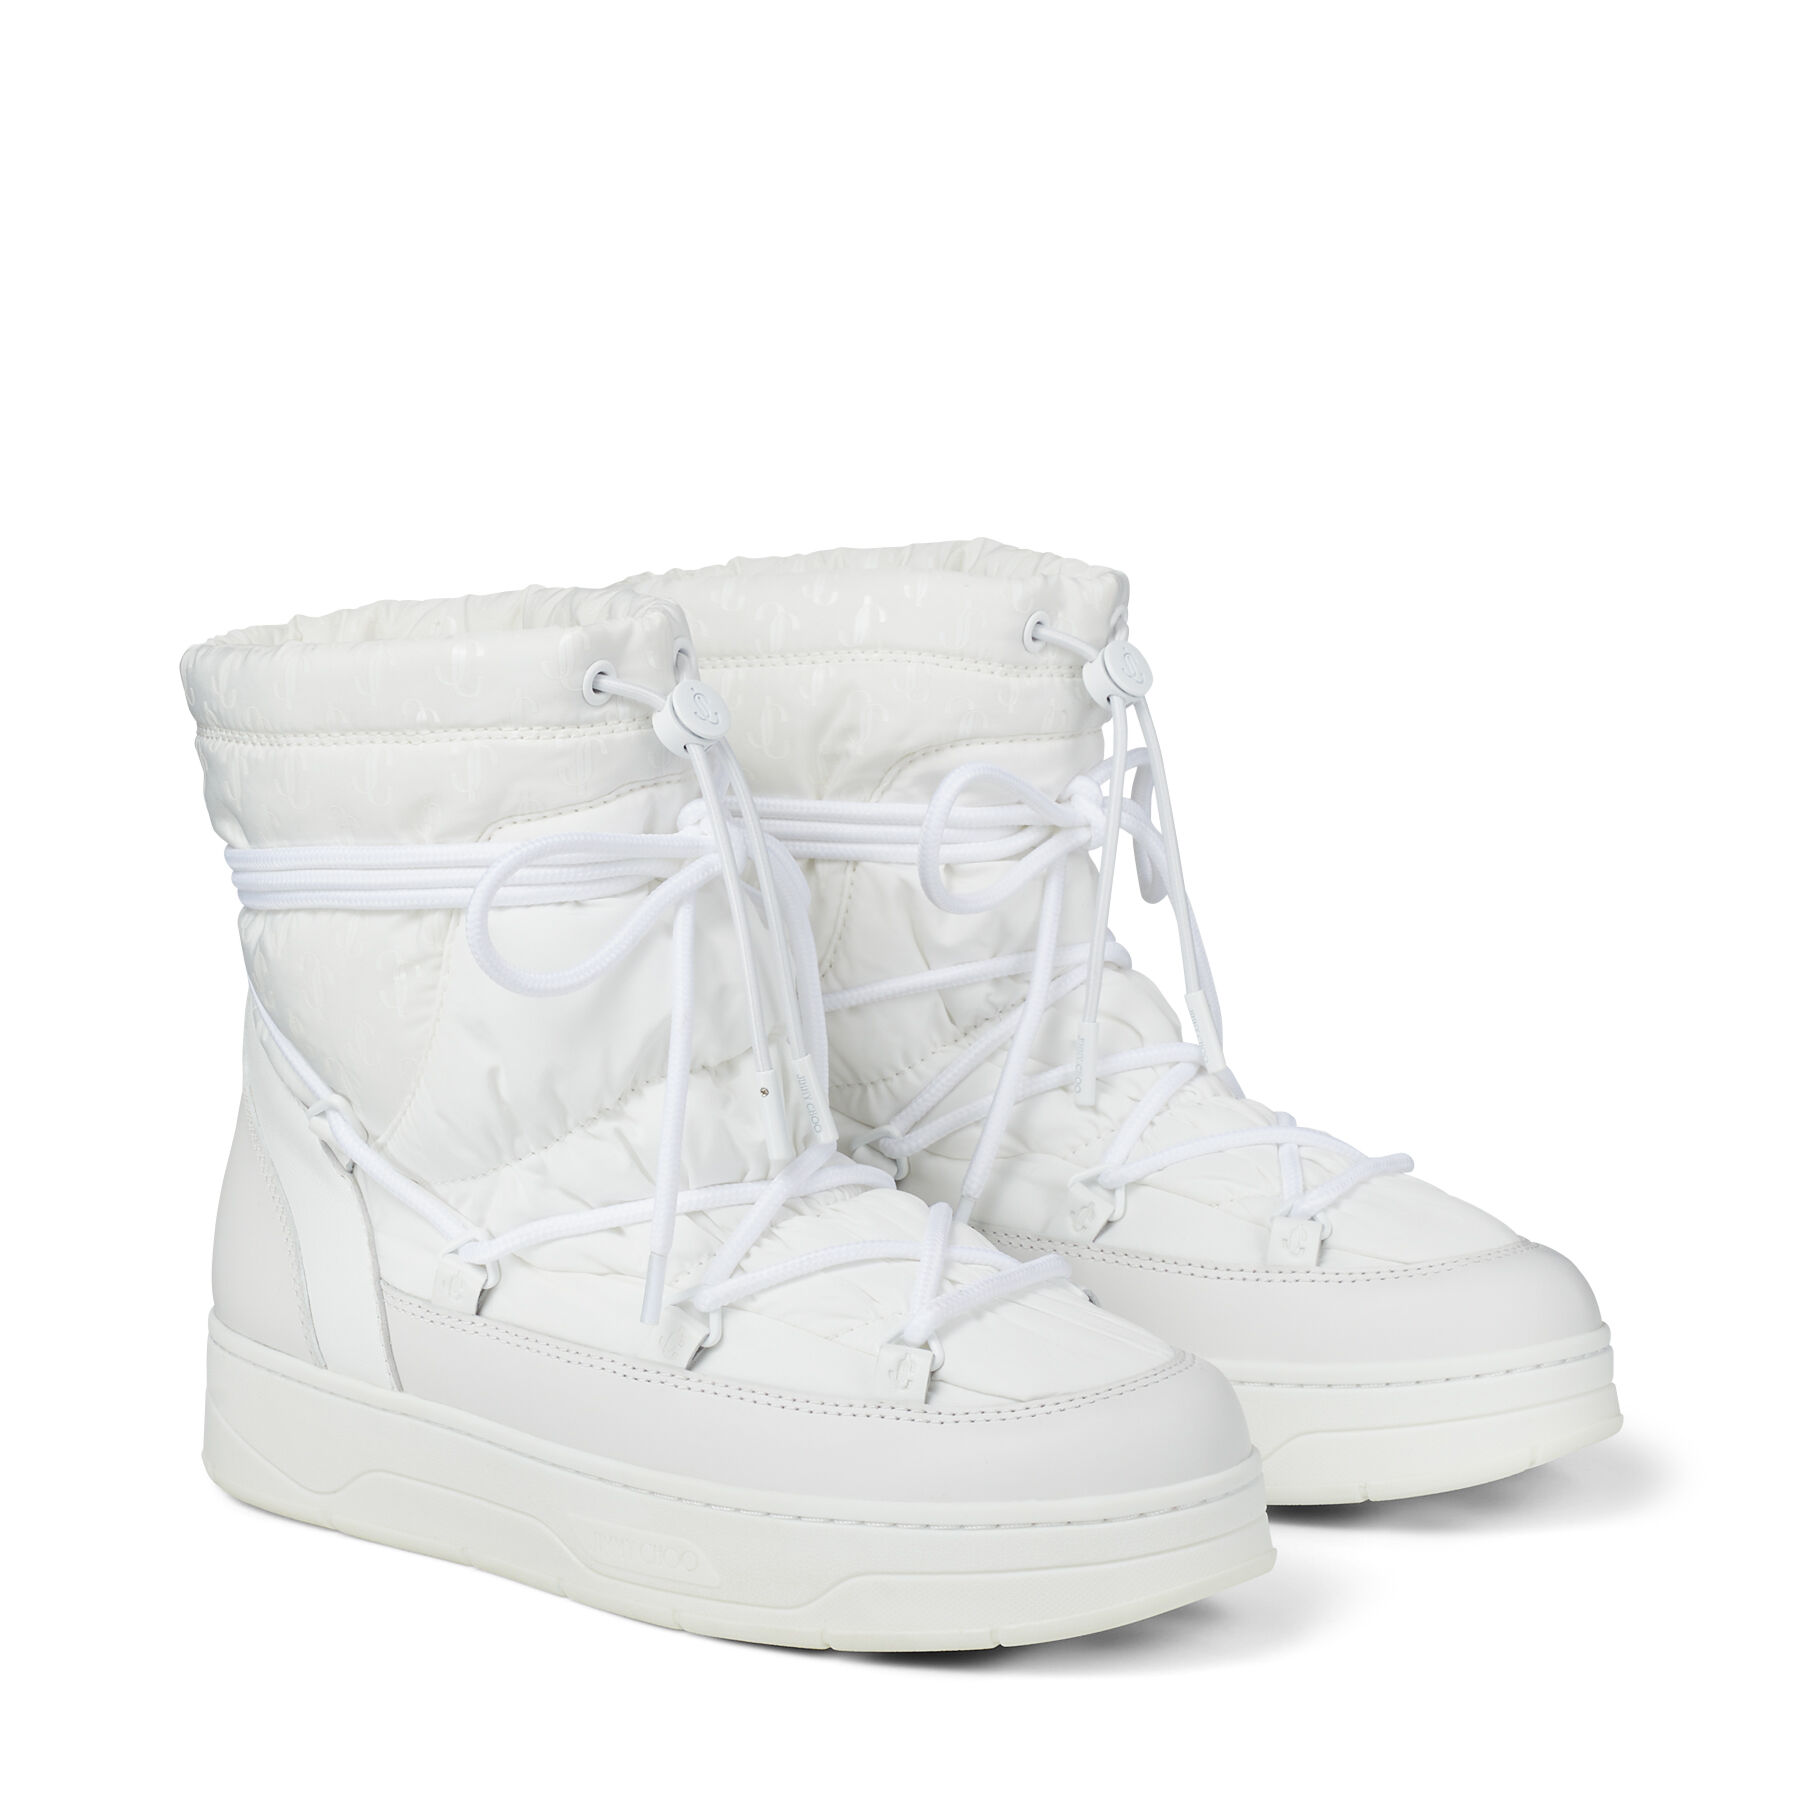 White JC Nylon and Leather Ski Boots | WANAKA | Winter 2021 